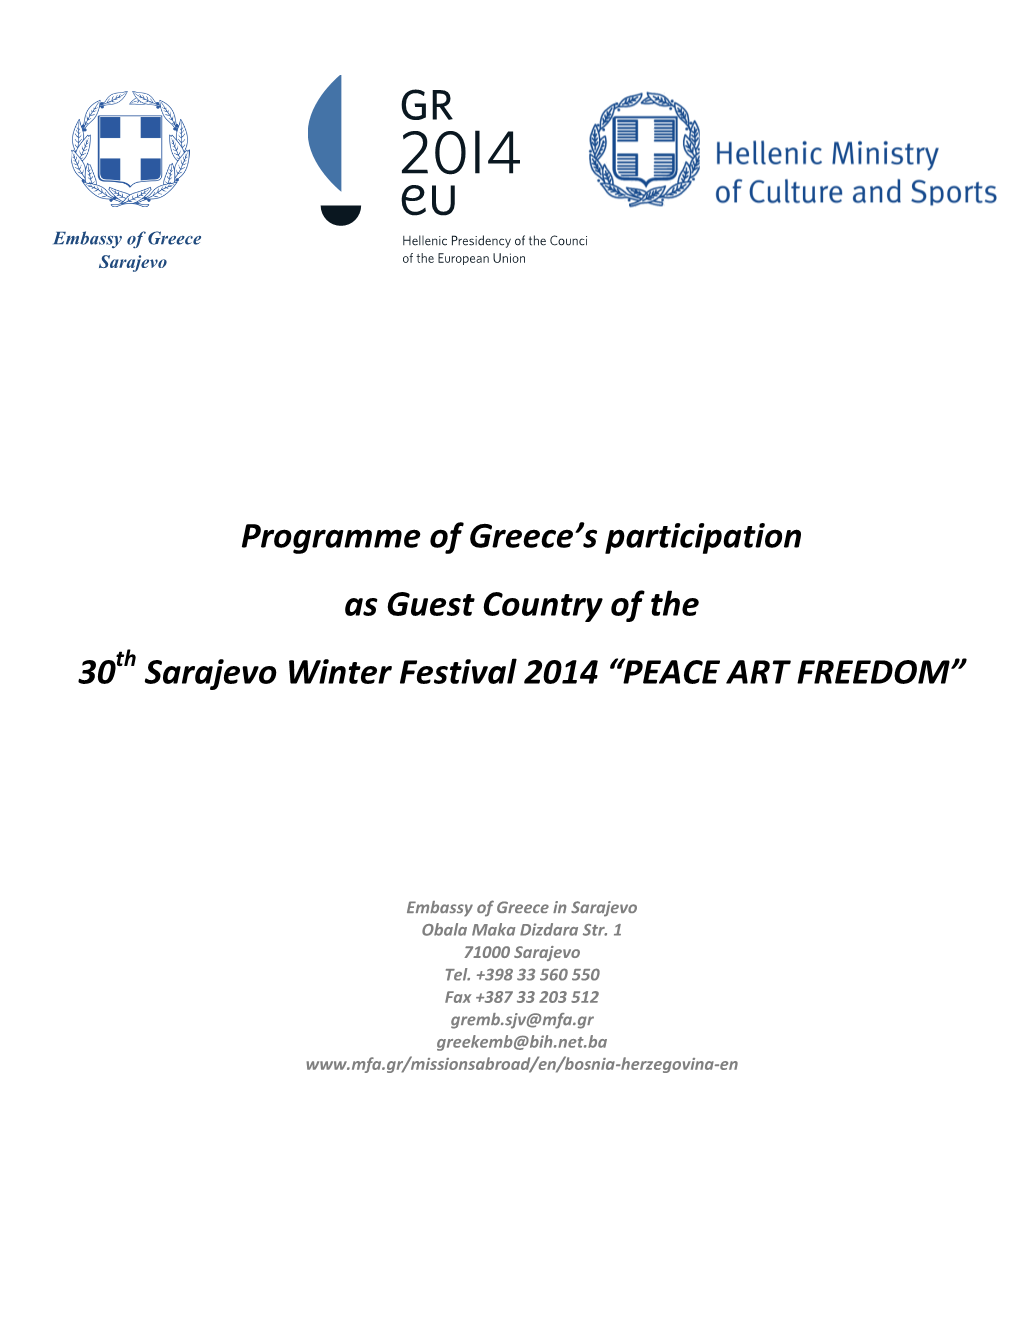 Sarajevo Winter Festival 2014 “PEACE ART FREEDOM”